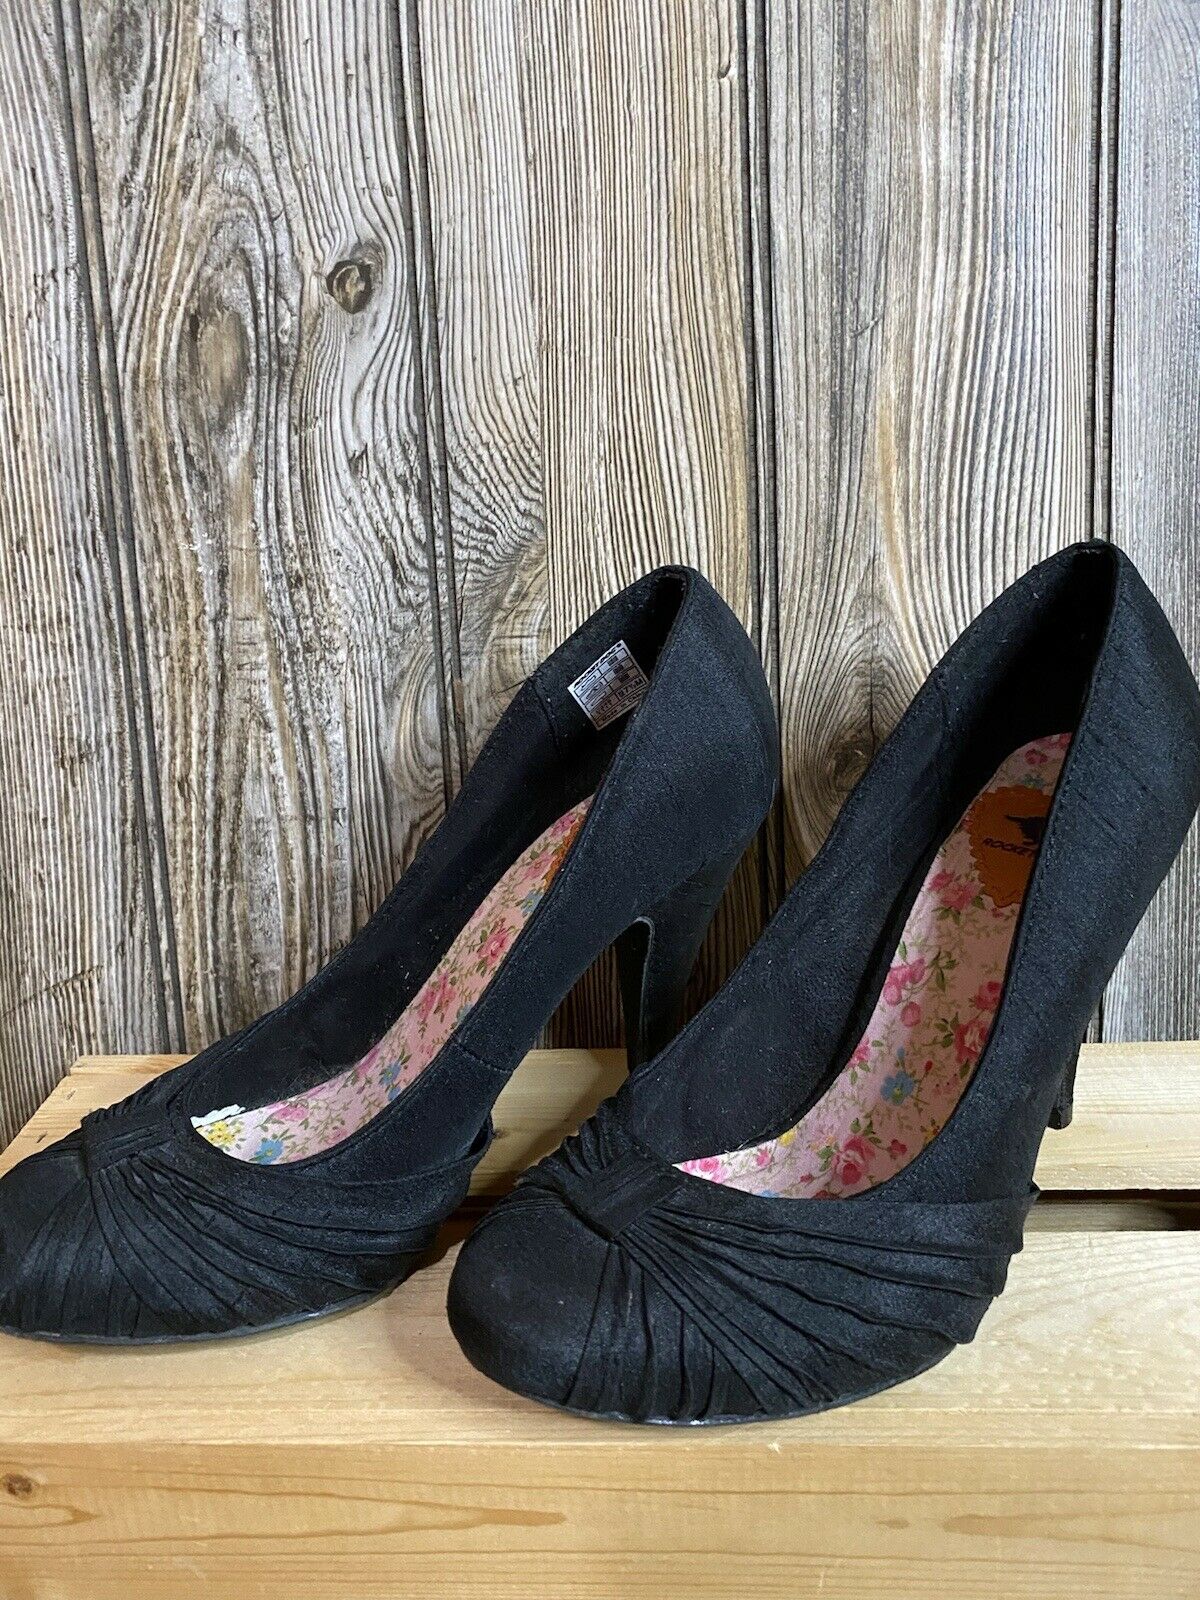 Rocket Dog High Heels Black Shoes Women Size 7.5 M-USA yb37